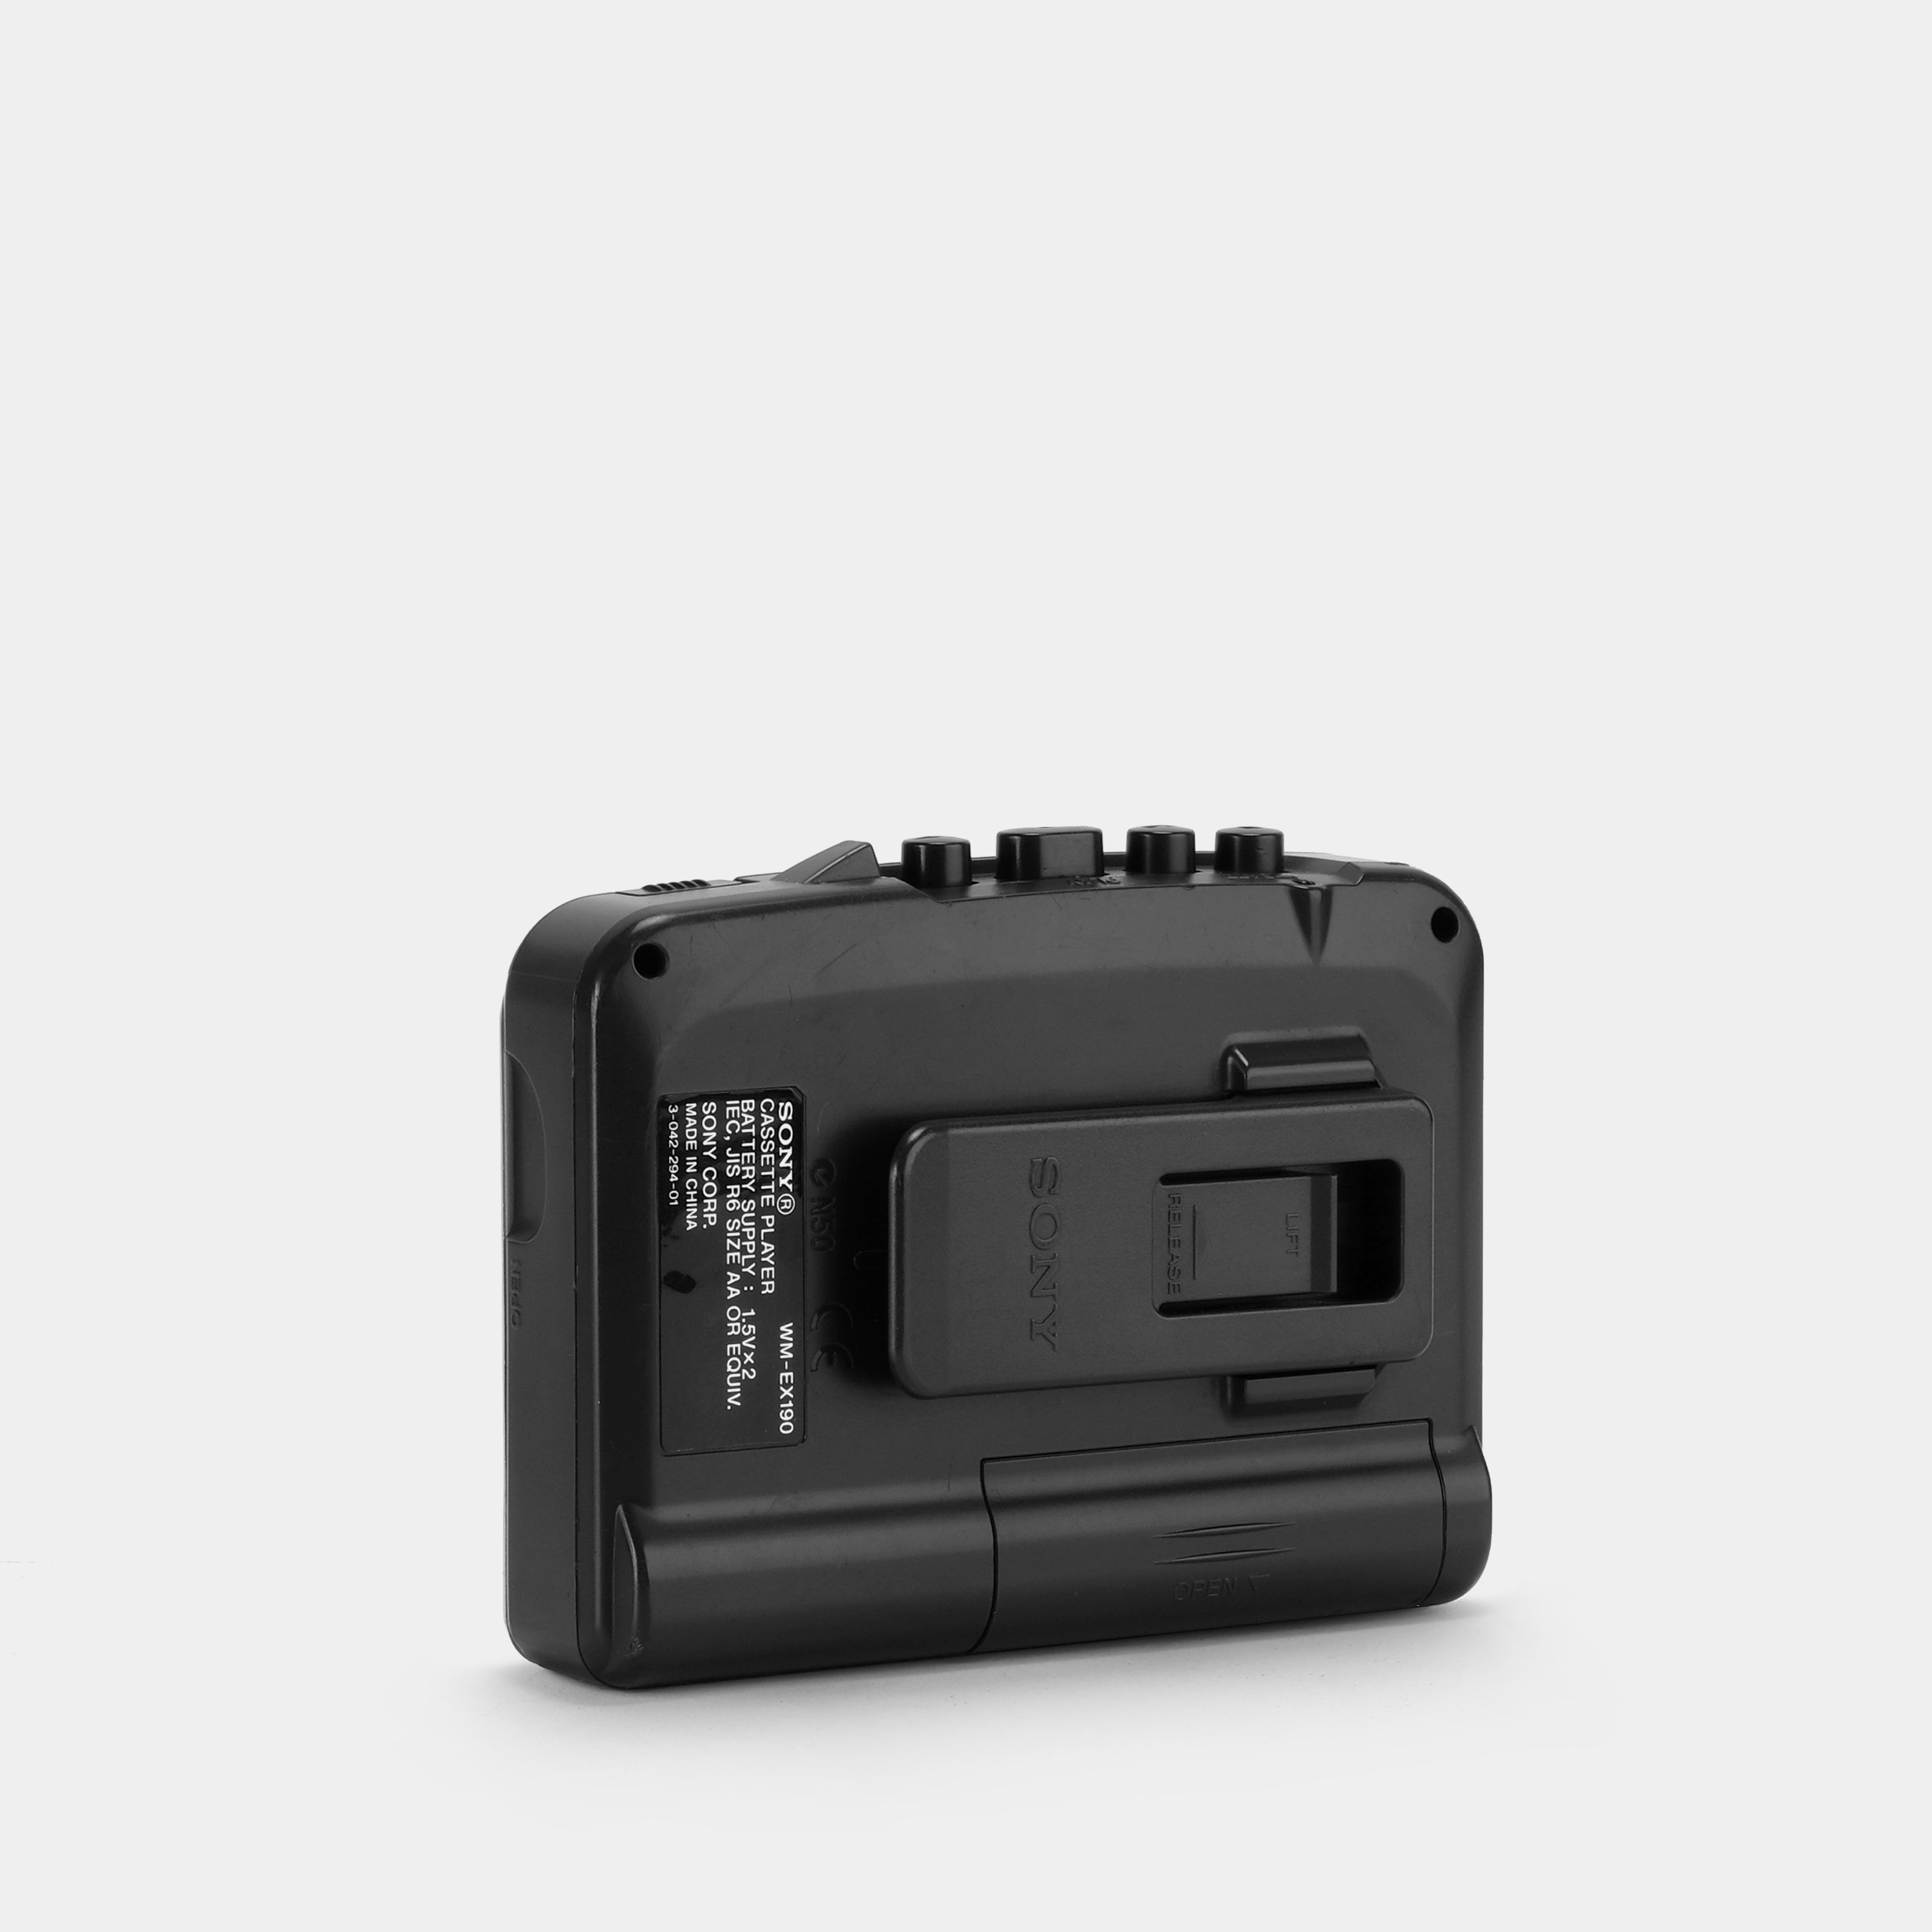 Sony Walkman WM-EX190 Portable Cassette Player